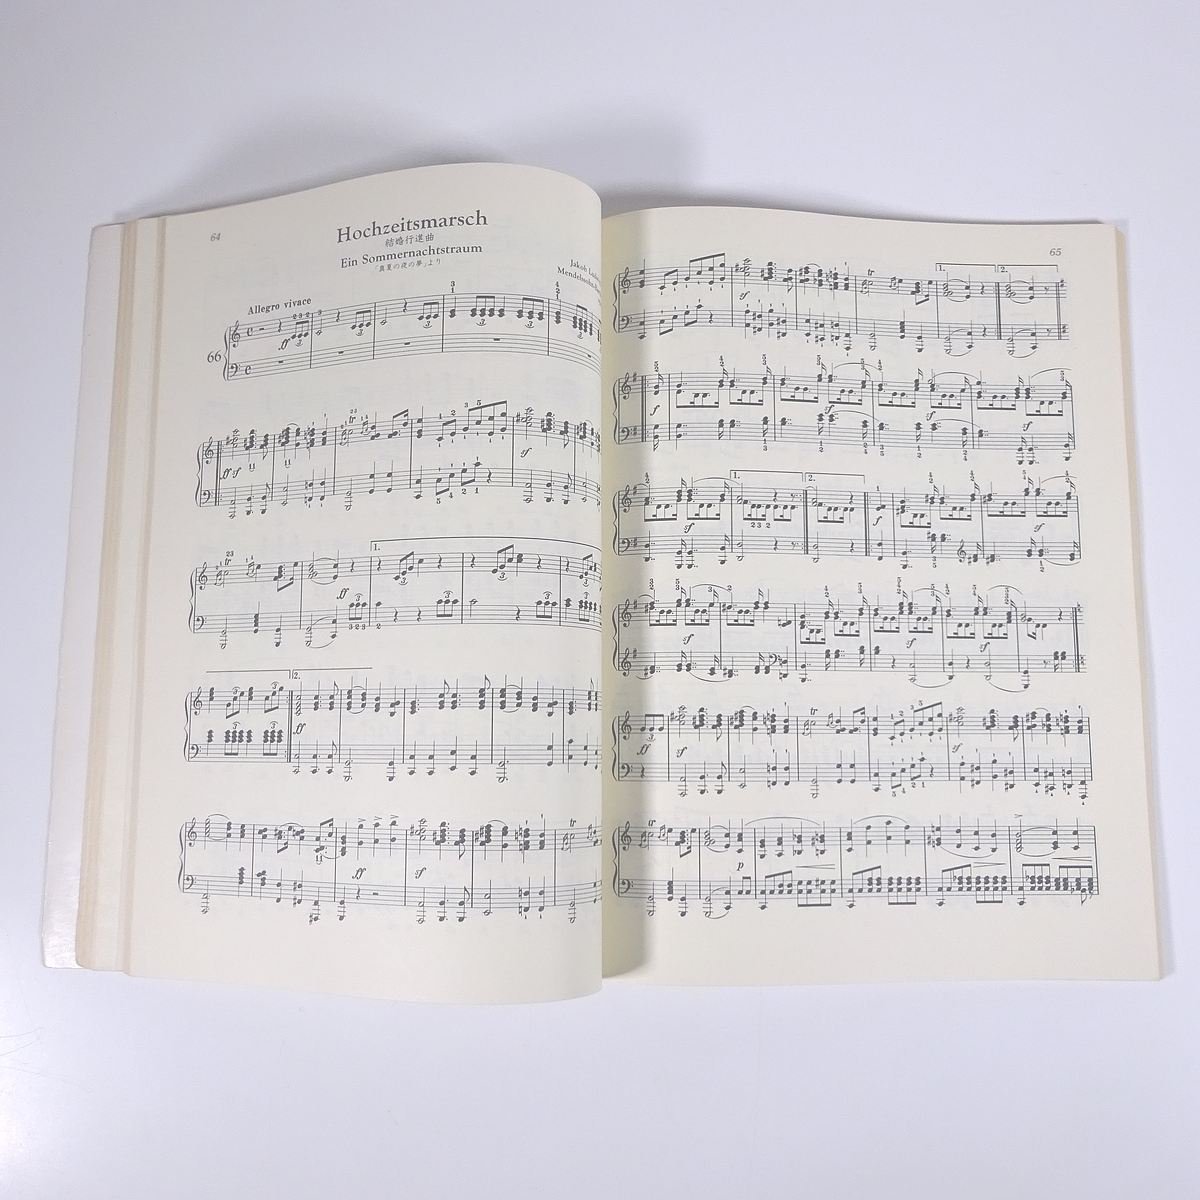 [ musical score ] piano masterpiece 110 selection GRADE B DOREMIdoremi musical score publish company 1993 large book@ music Classic piano 